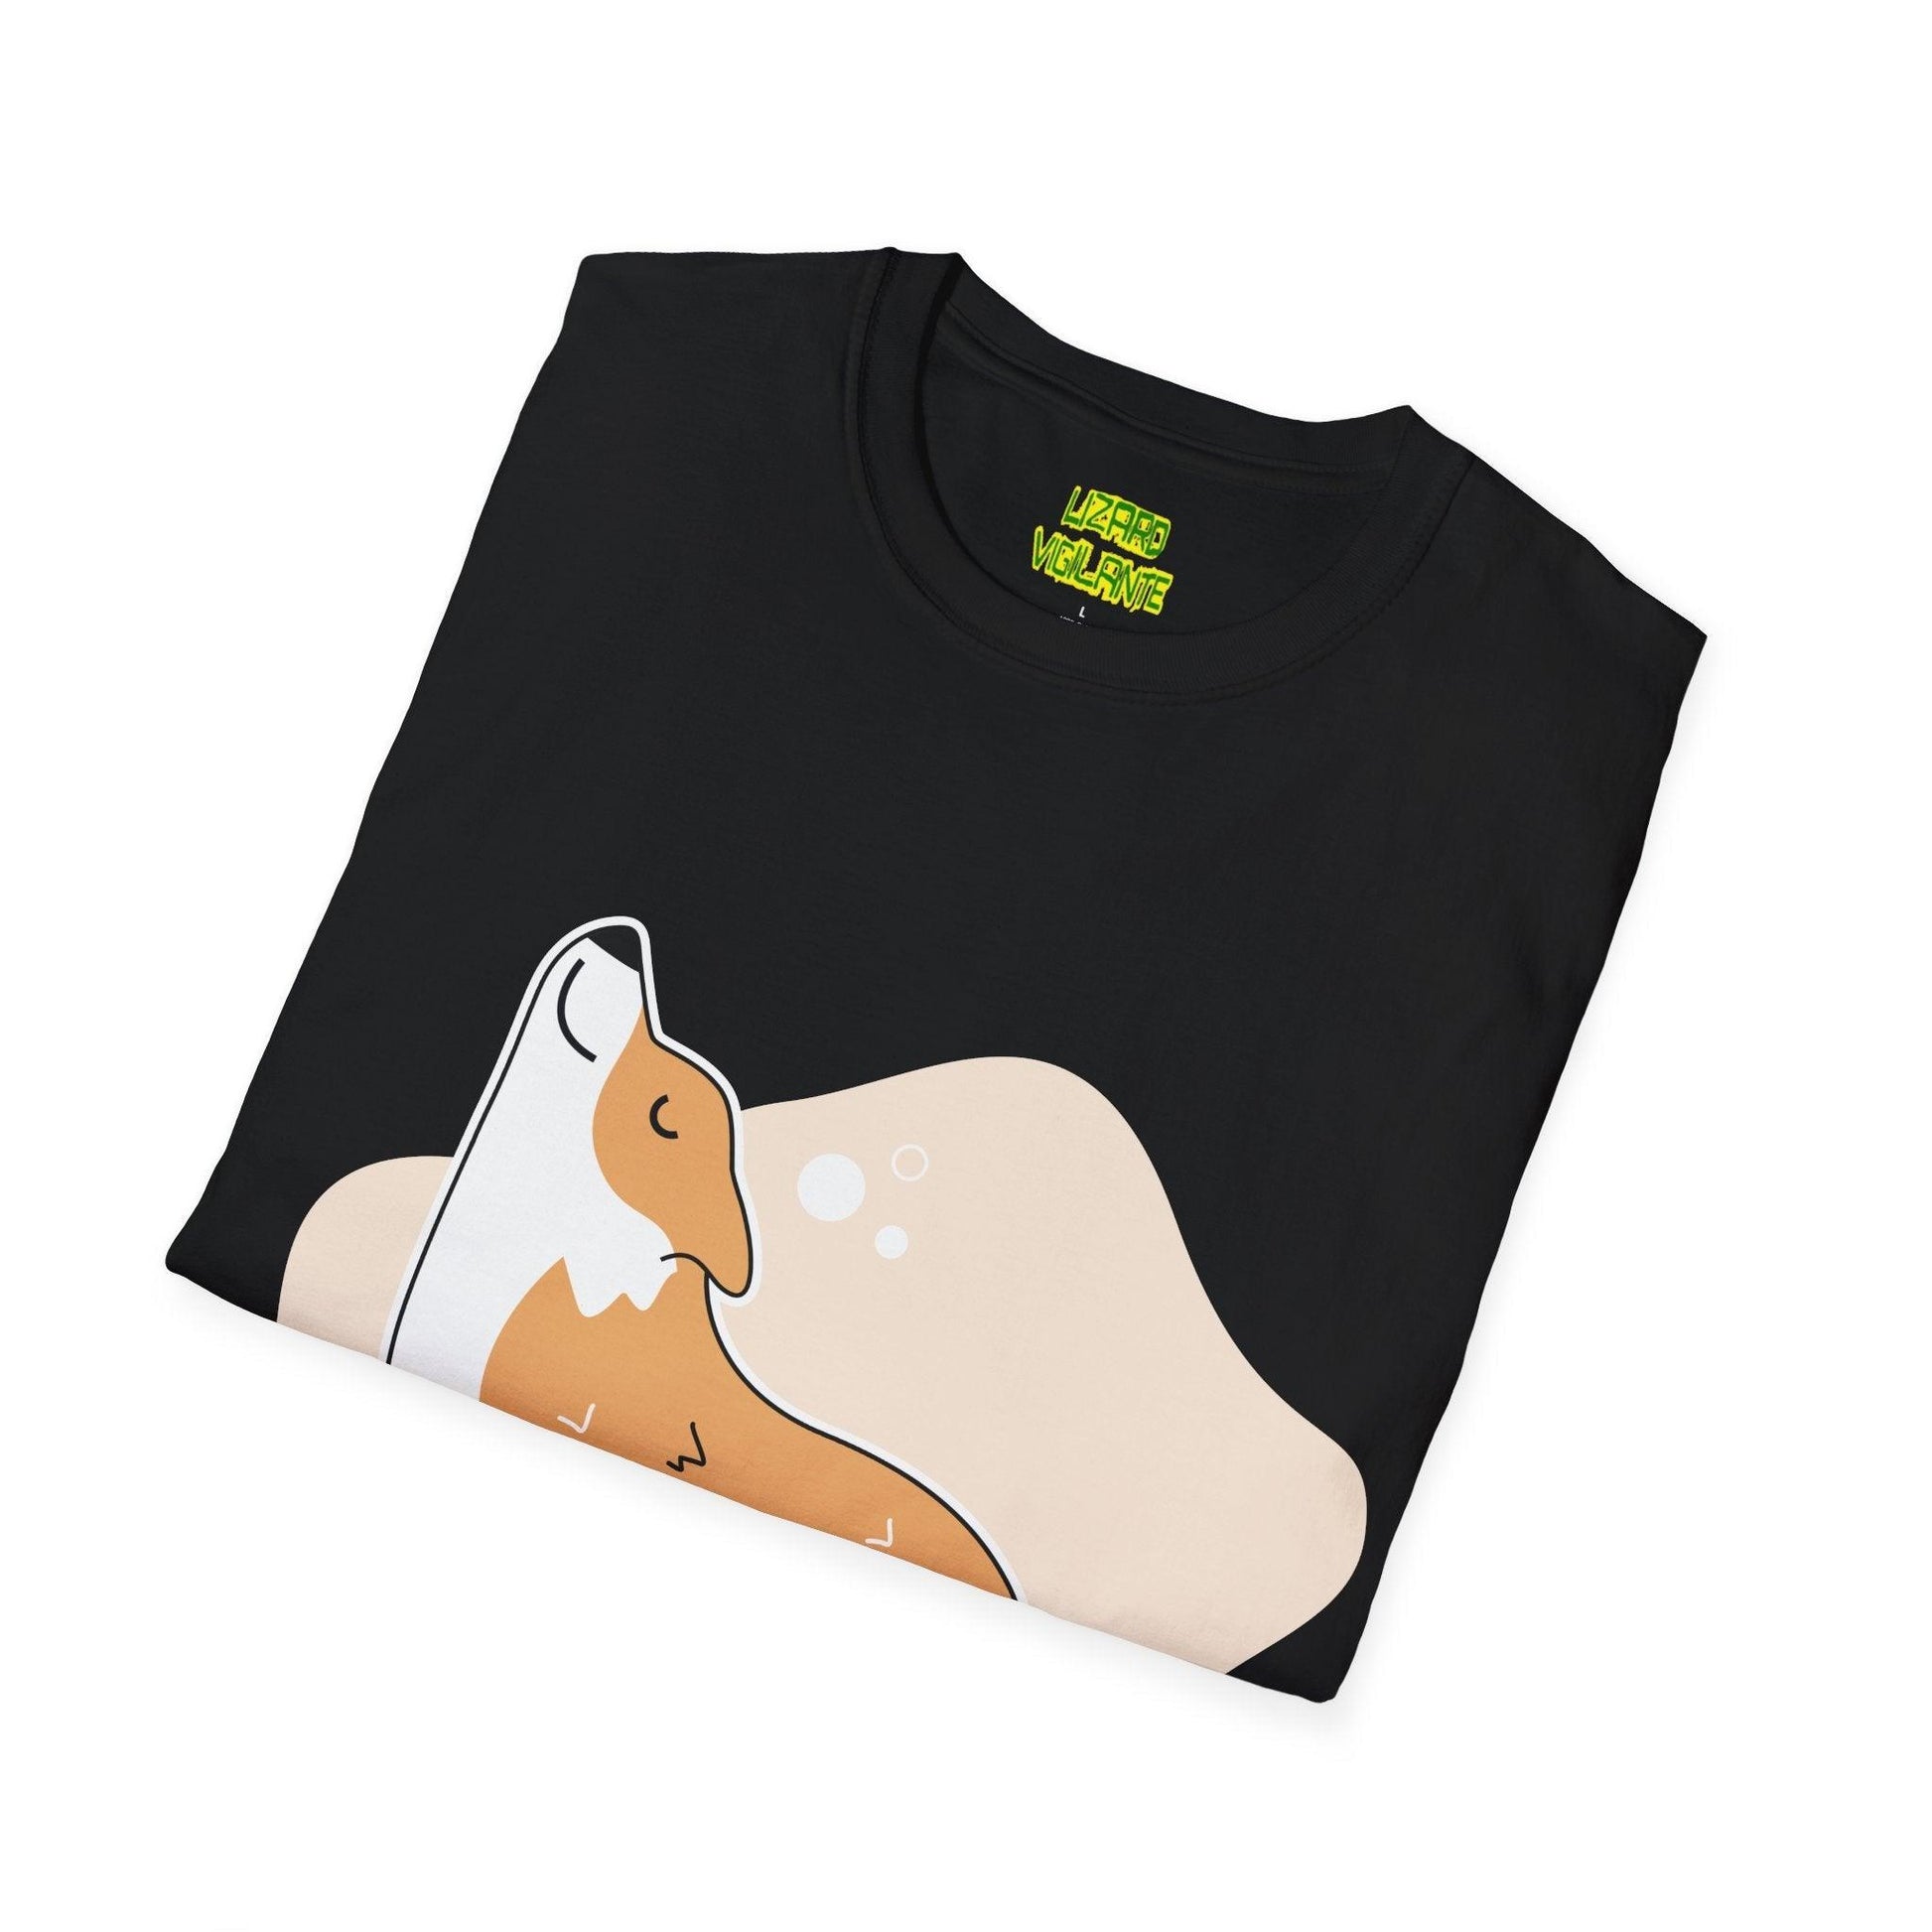 Yoga Dog Pose Unisex Softstyle T-Shirt - Lizard Vigilante